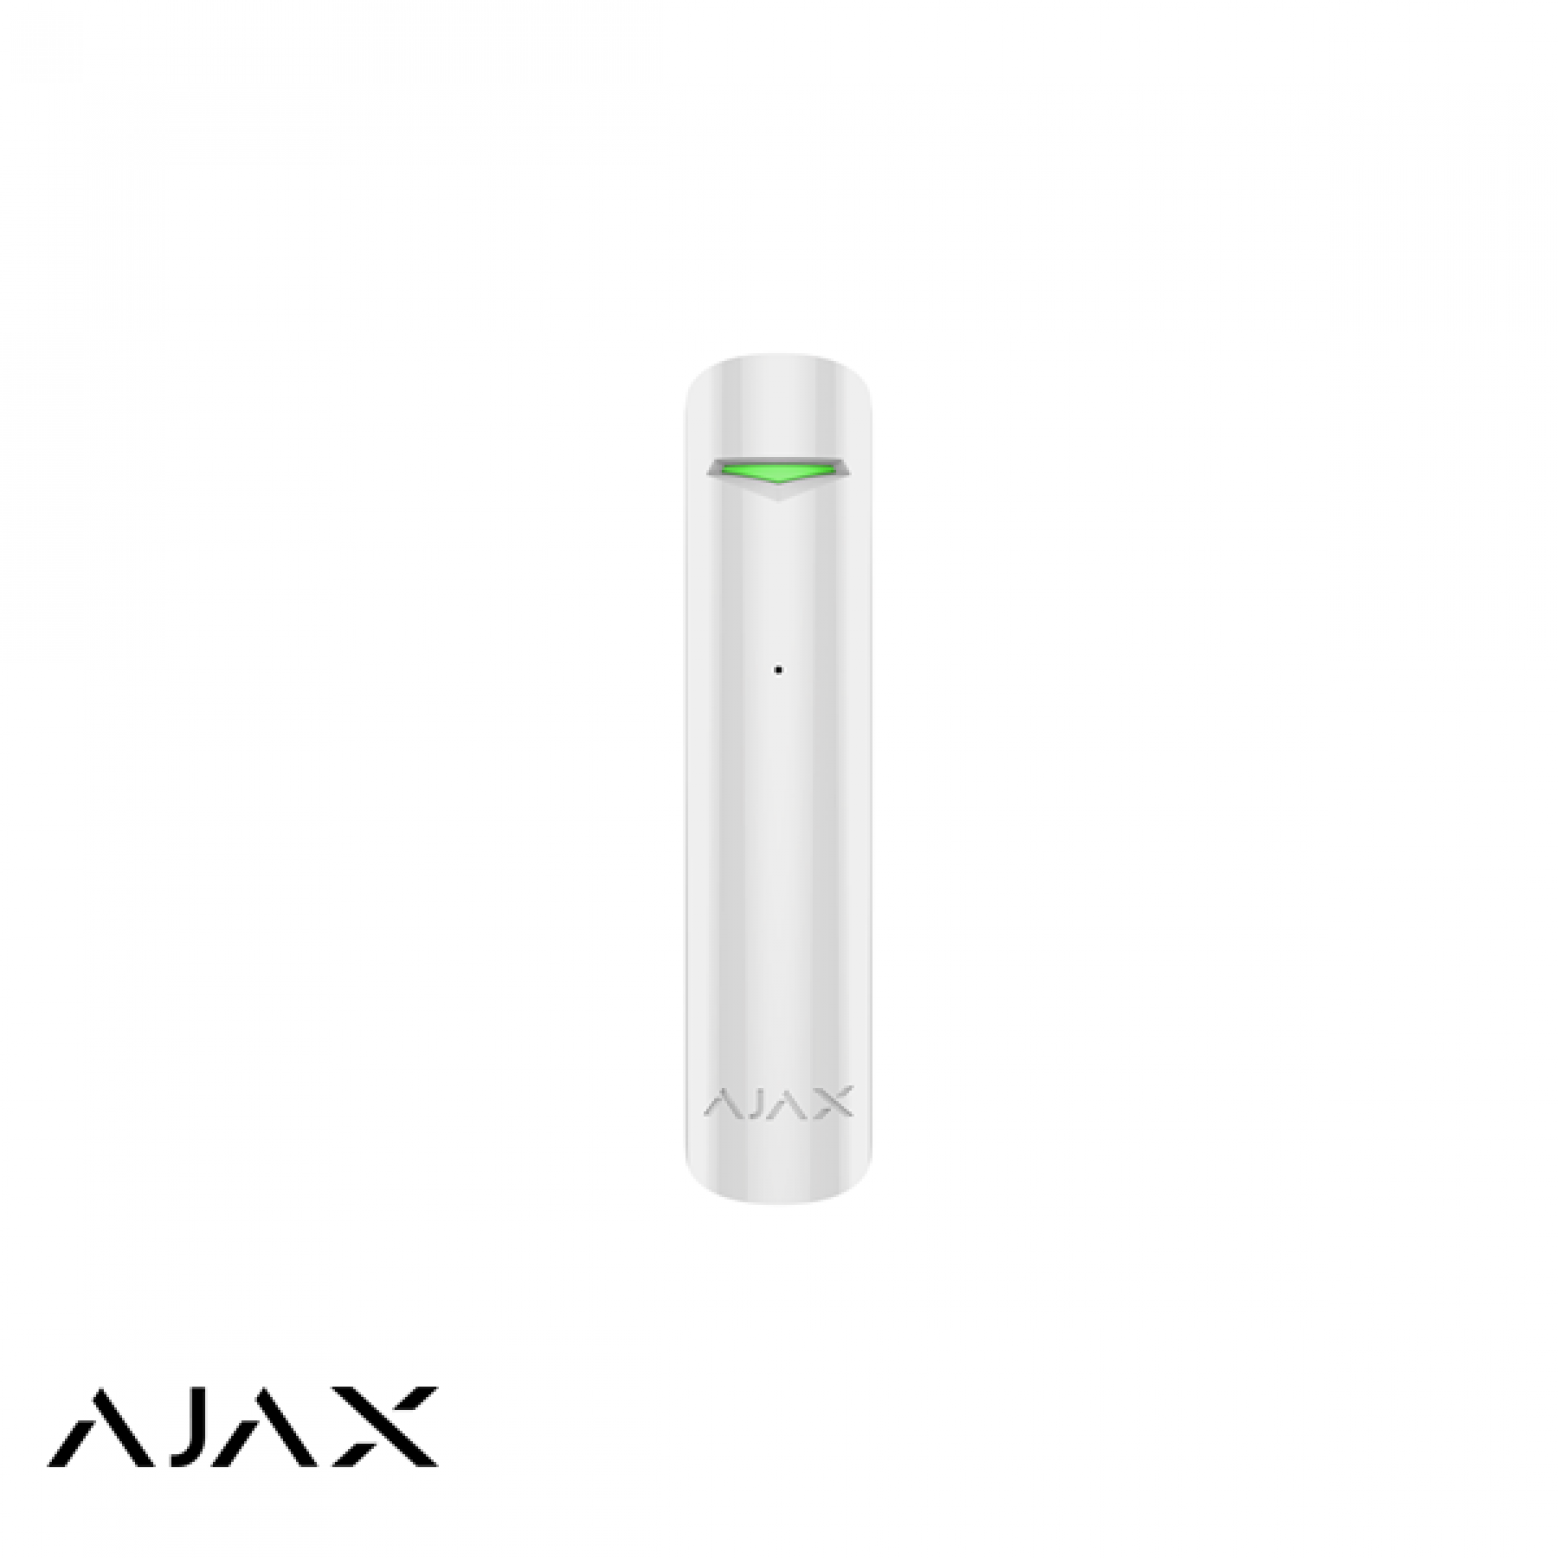 Ajax GlassProtect glass breakage detector